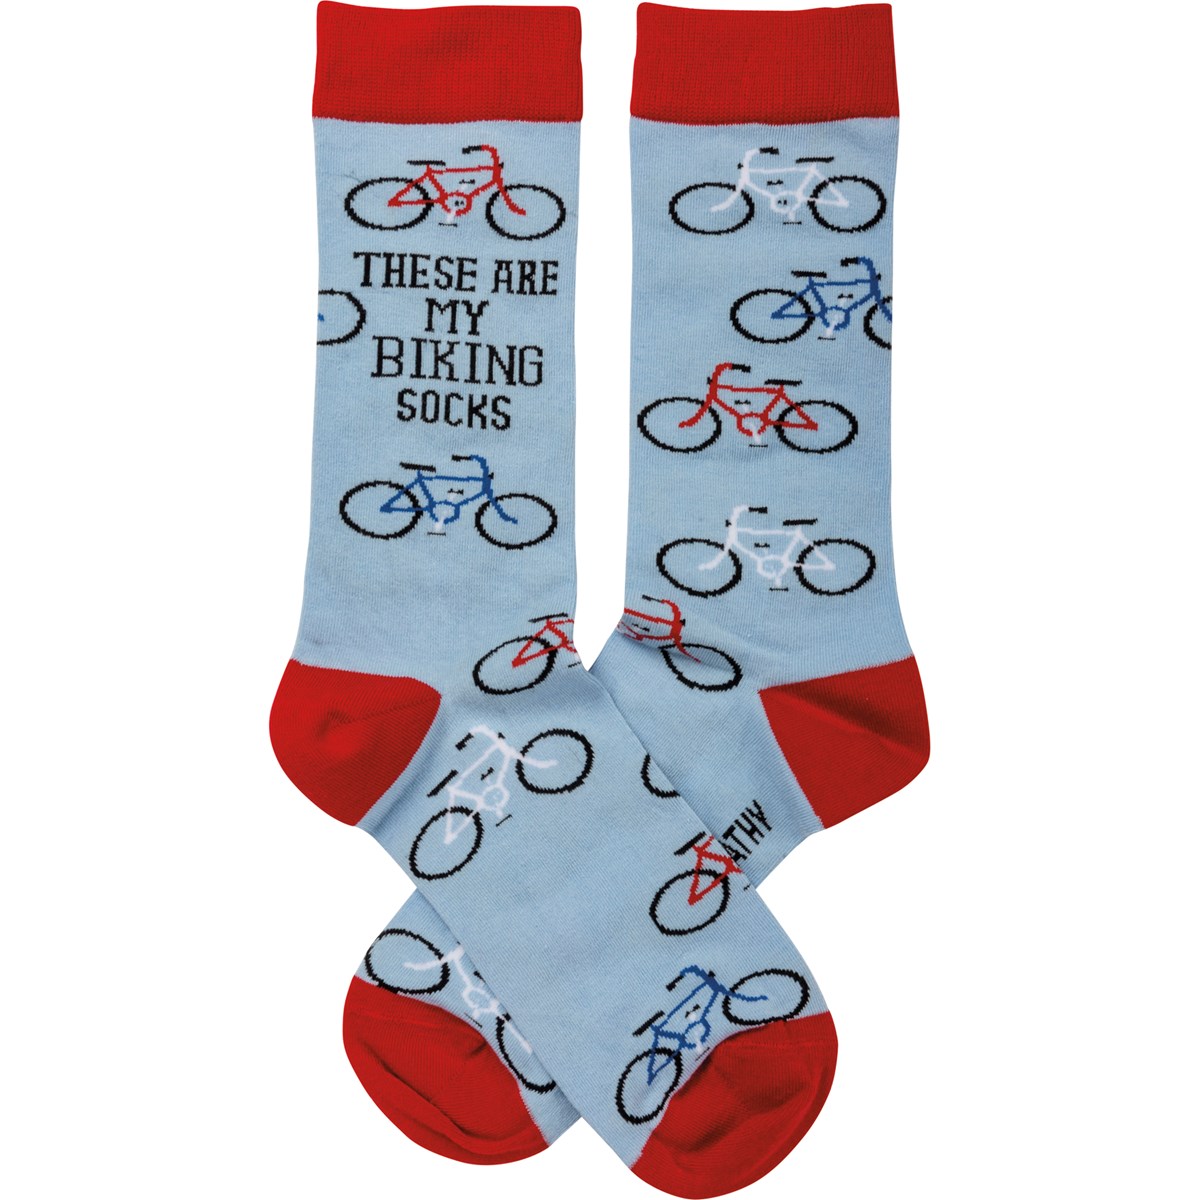 These Are My Biking Socks - Cotton, Nylon, Spandex